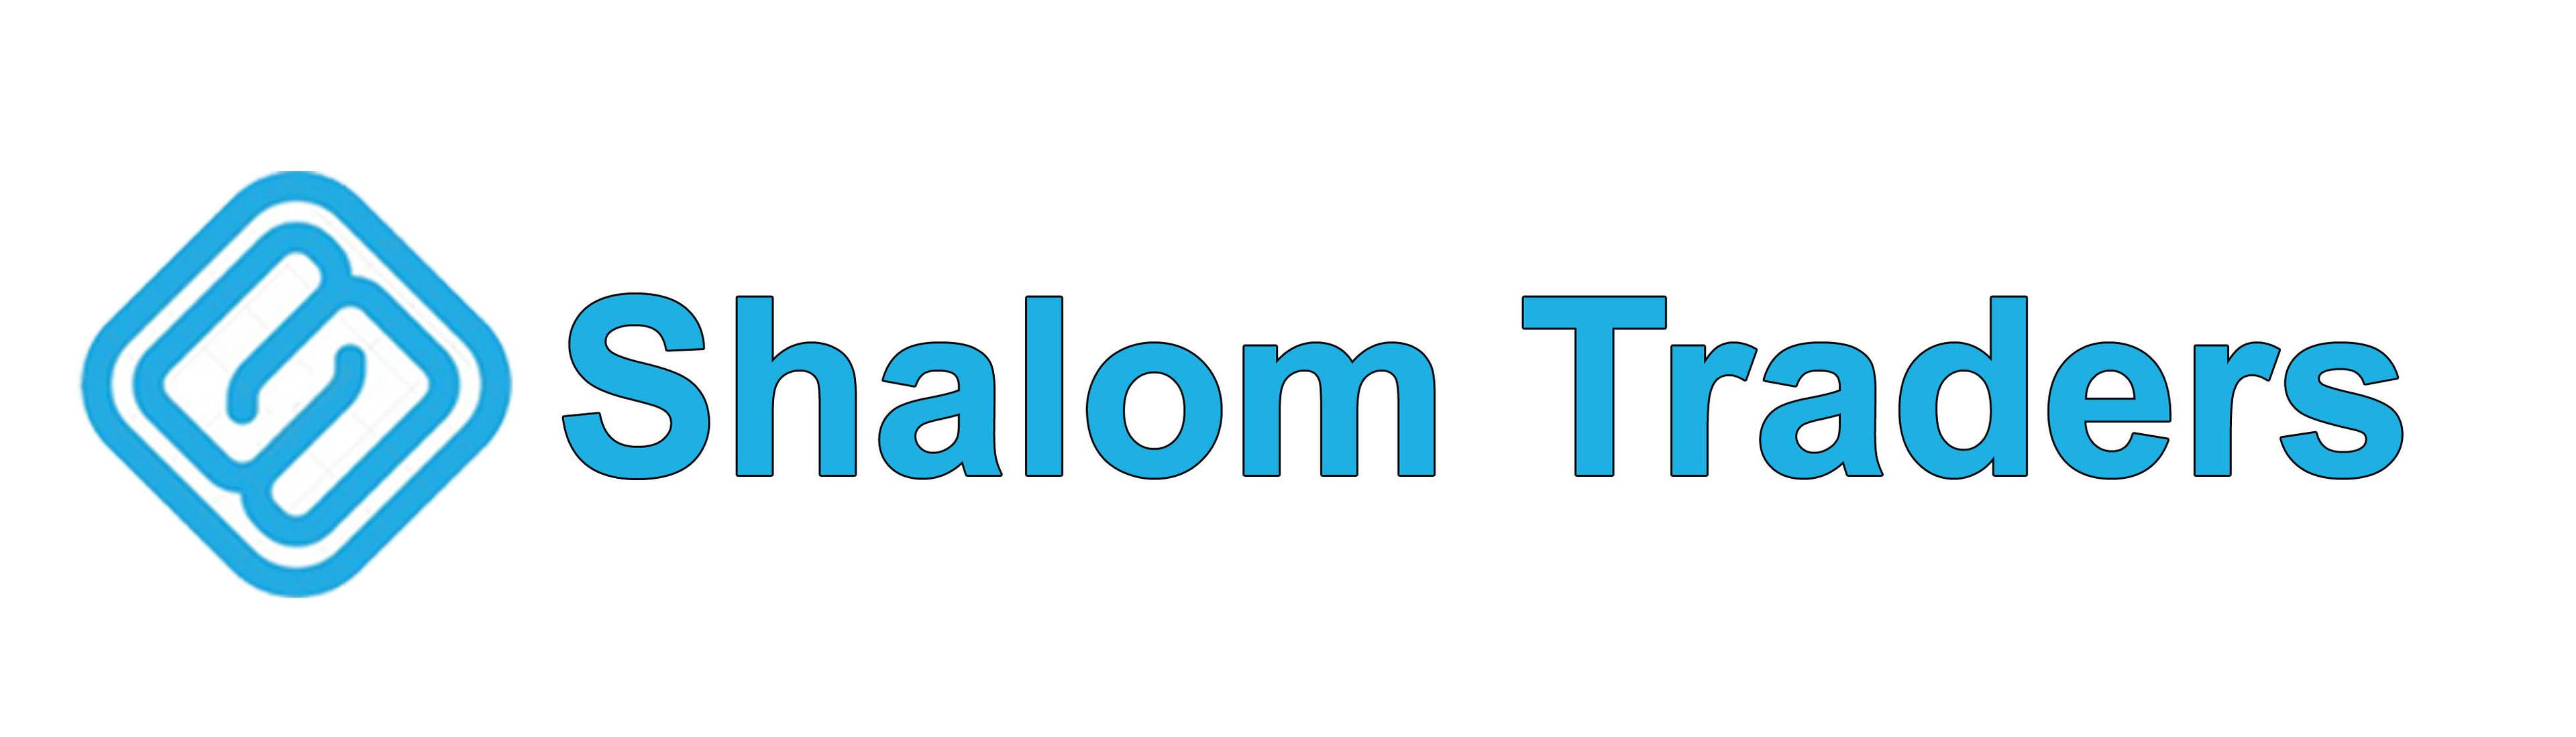 Shalom Traders